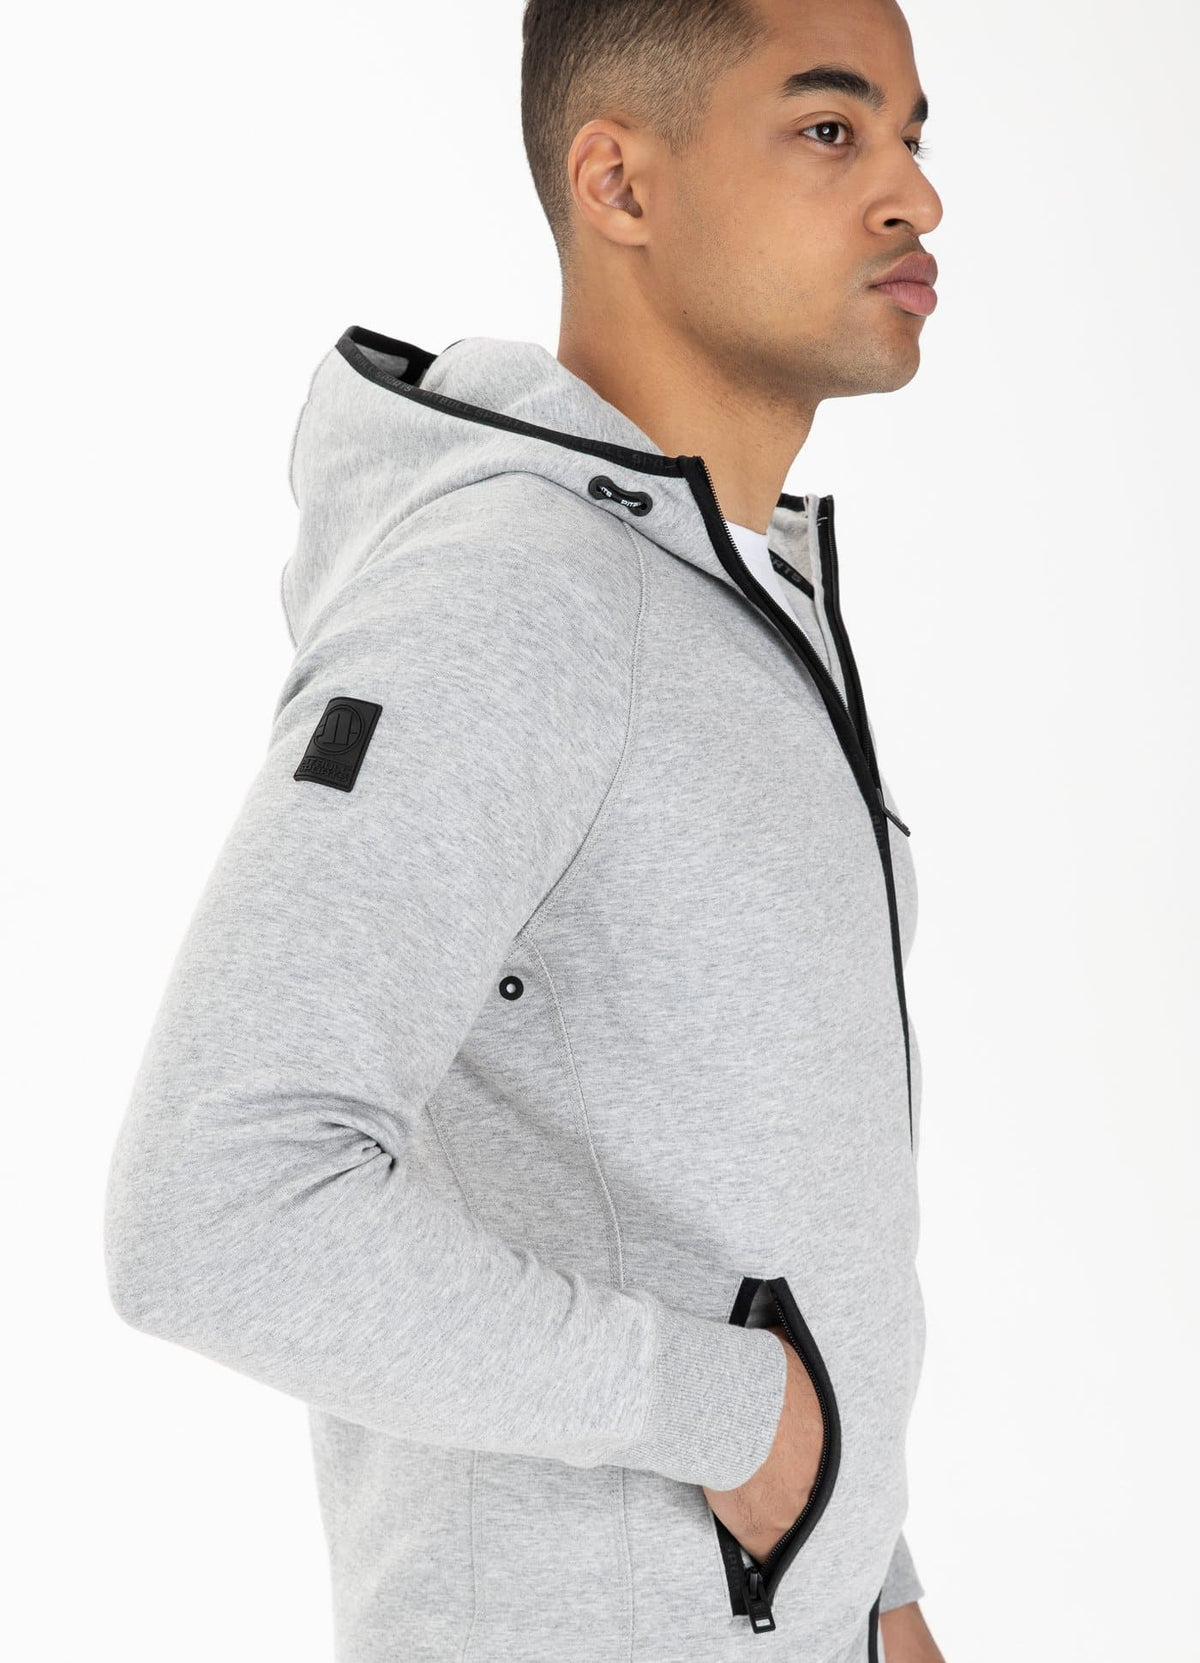 Thelborn Hooded Zip Sweatshirt Grey MLG - Pitbull West Coast International Store 